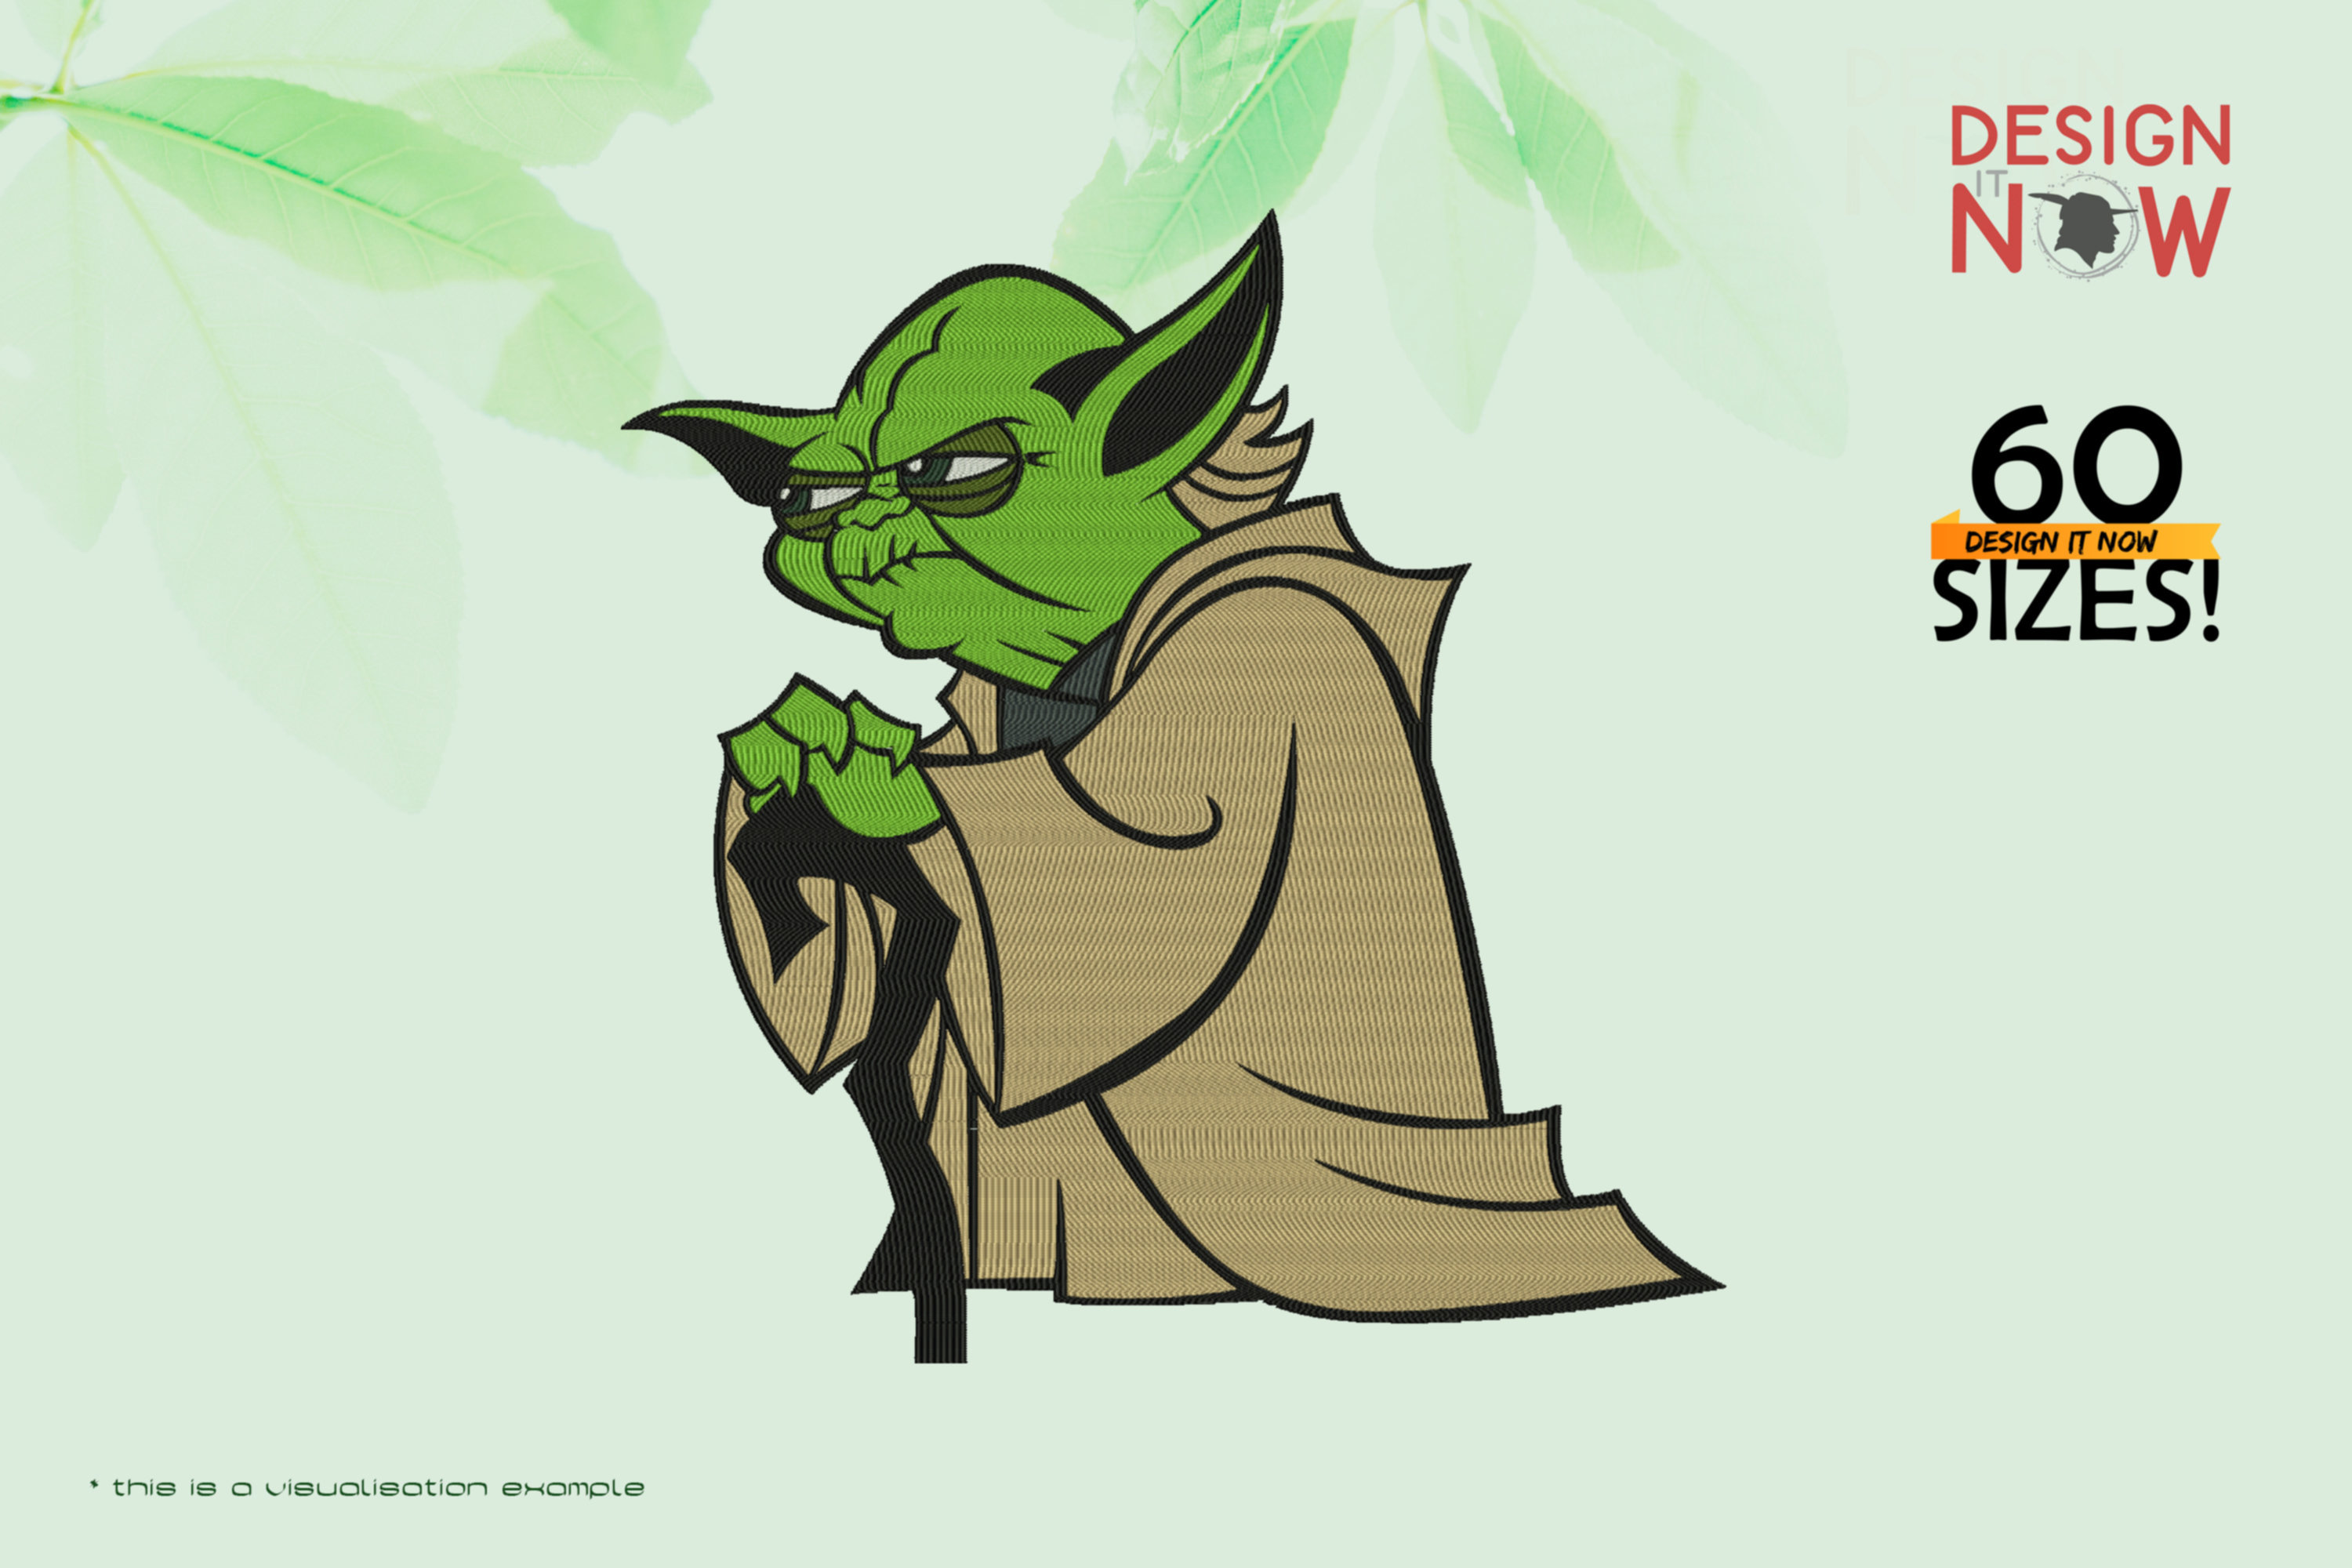  Tribute To Fictional Character Minch Yoda aka Yoda (Profile)